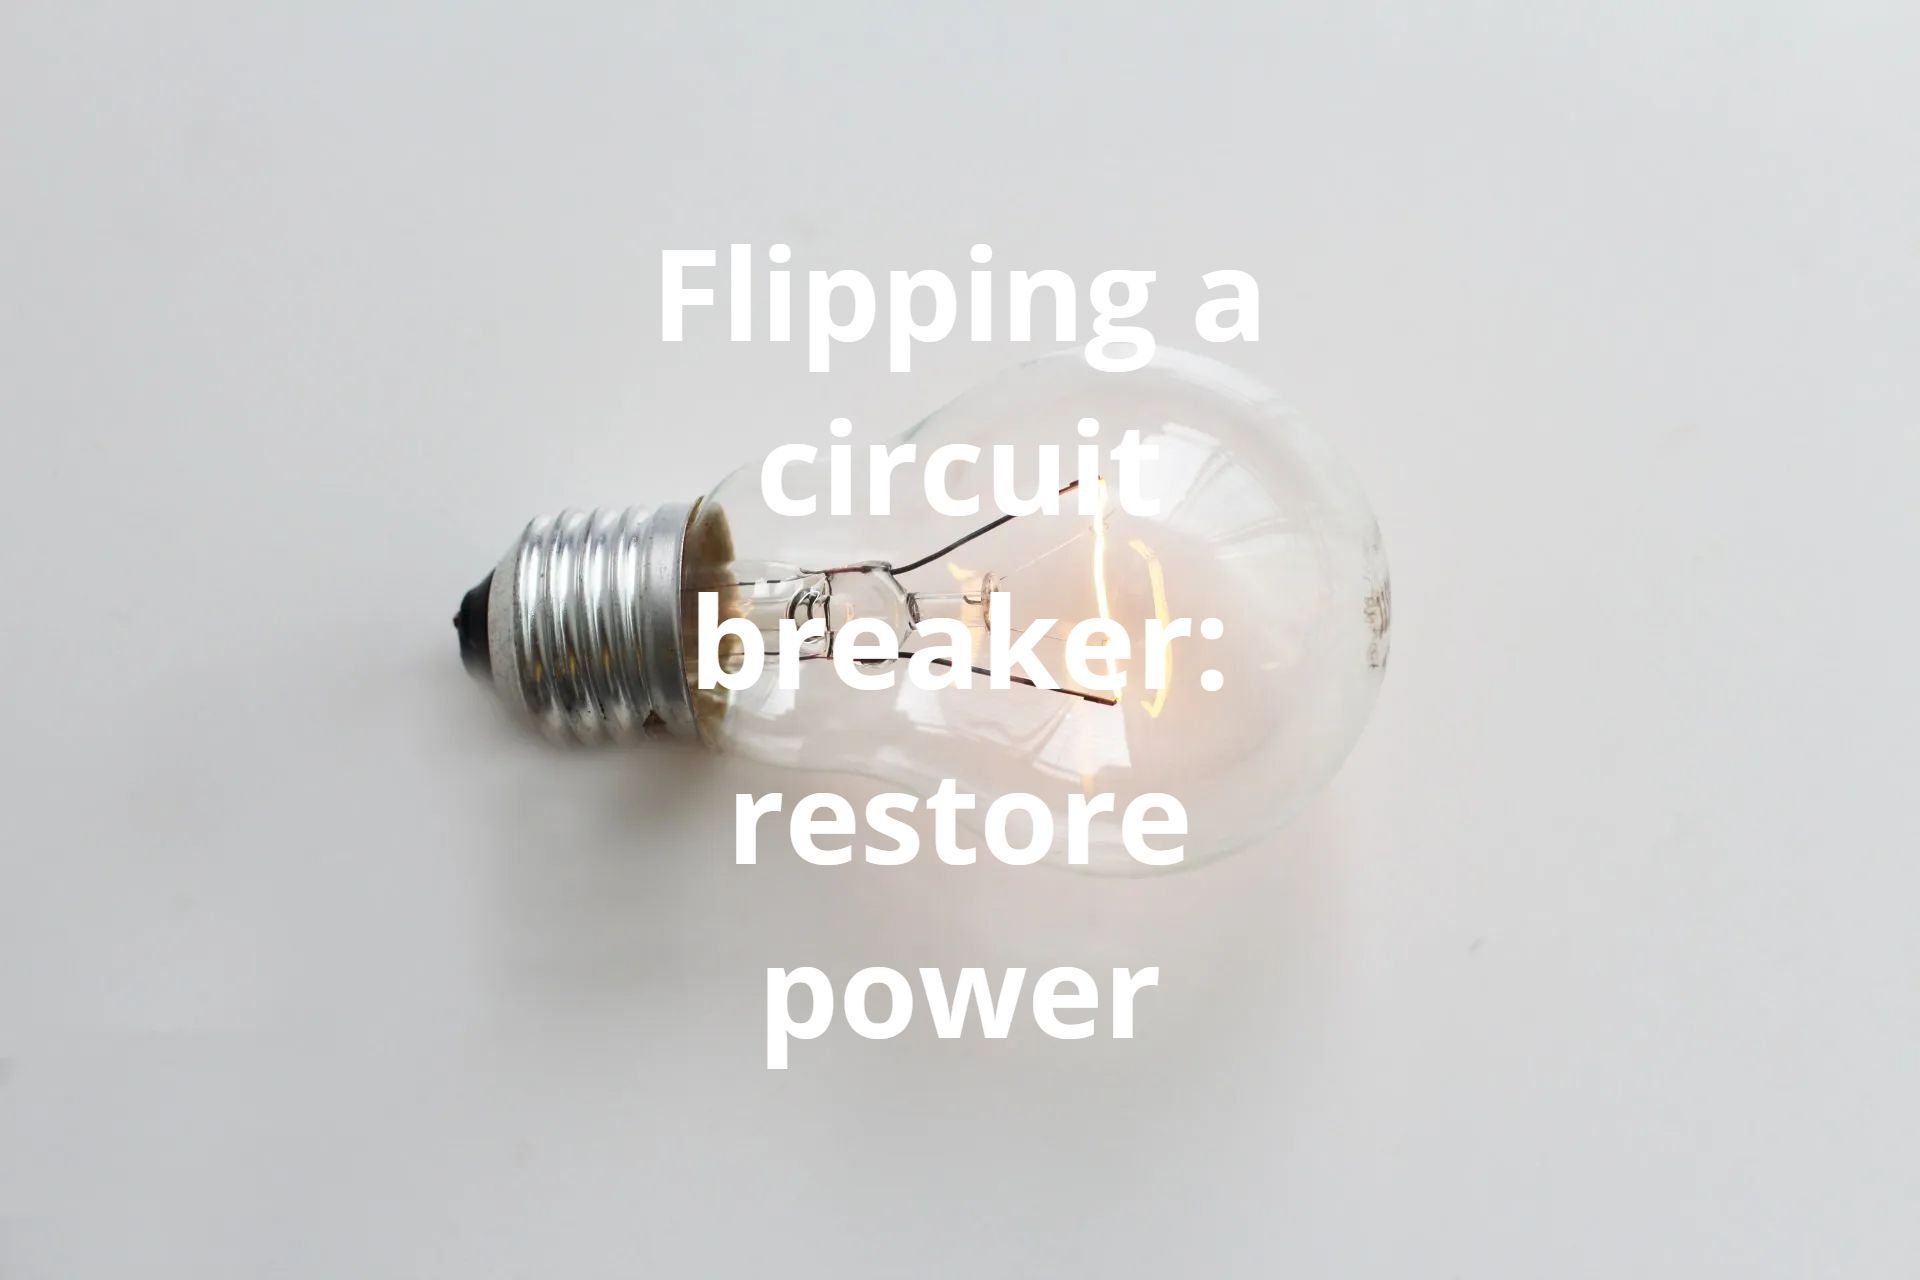 Flipping a circuit breaker